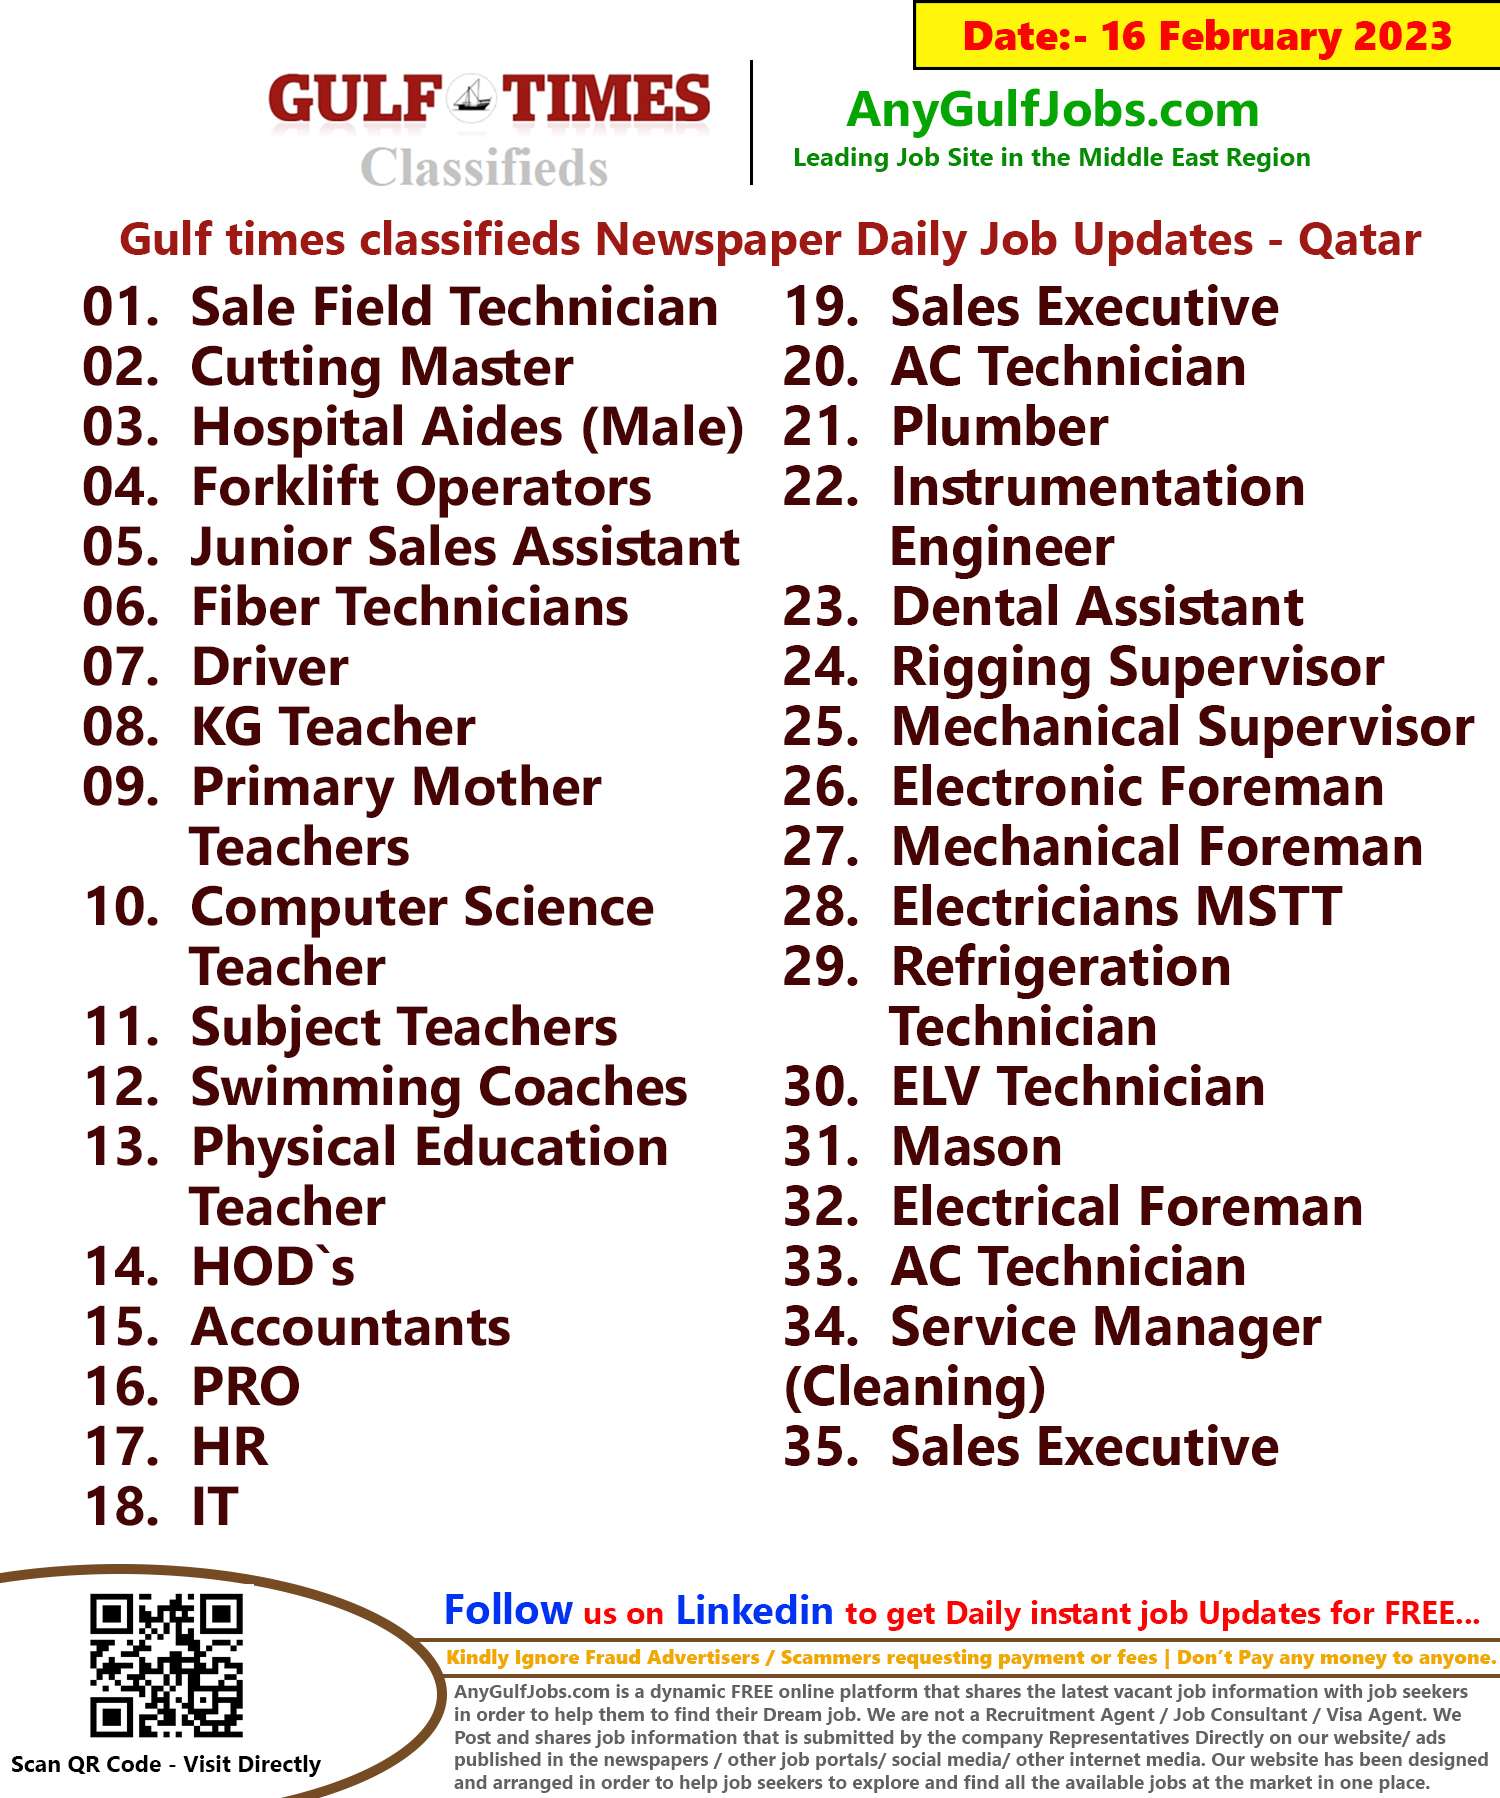 Gulf times classifieds Job Vacancies Qatar - 16 February 2023